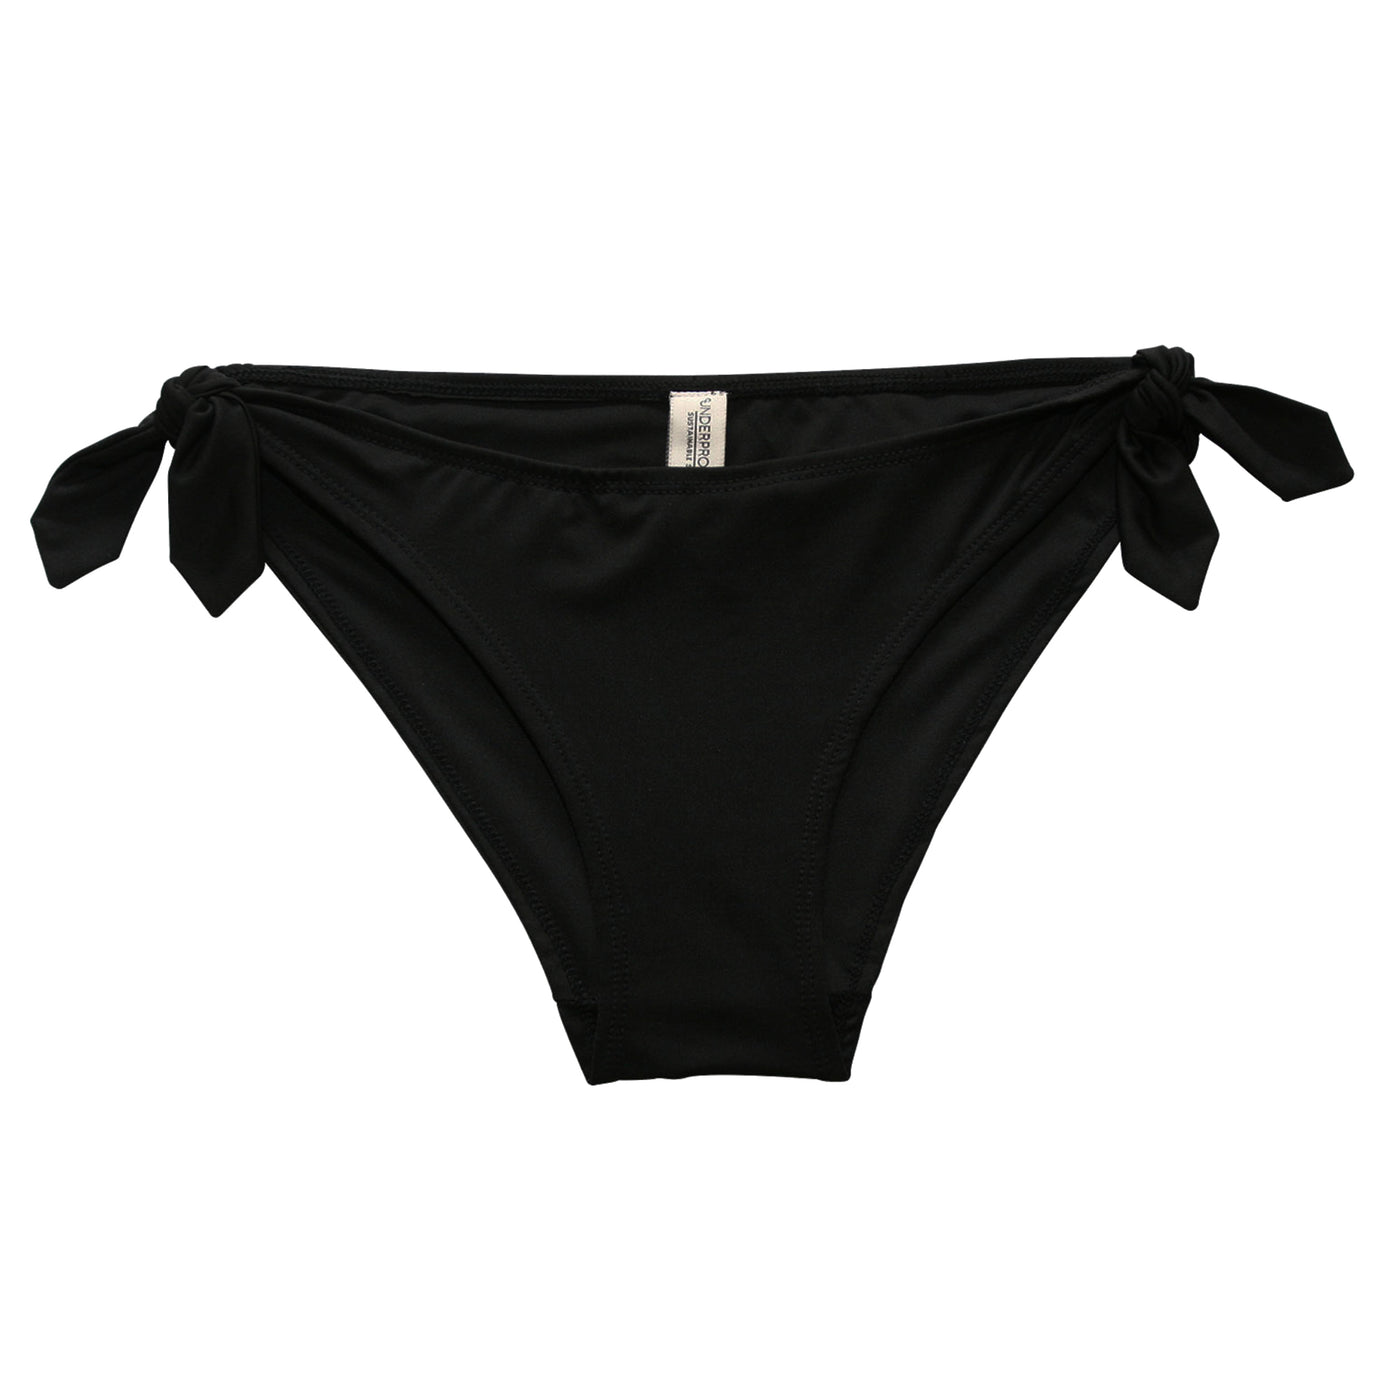 Alexia bikini briefs in black recycled polyester. Sustainable swimwear